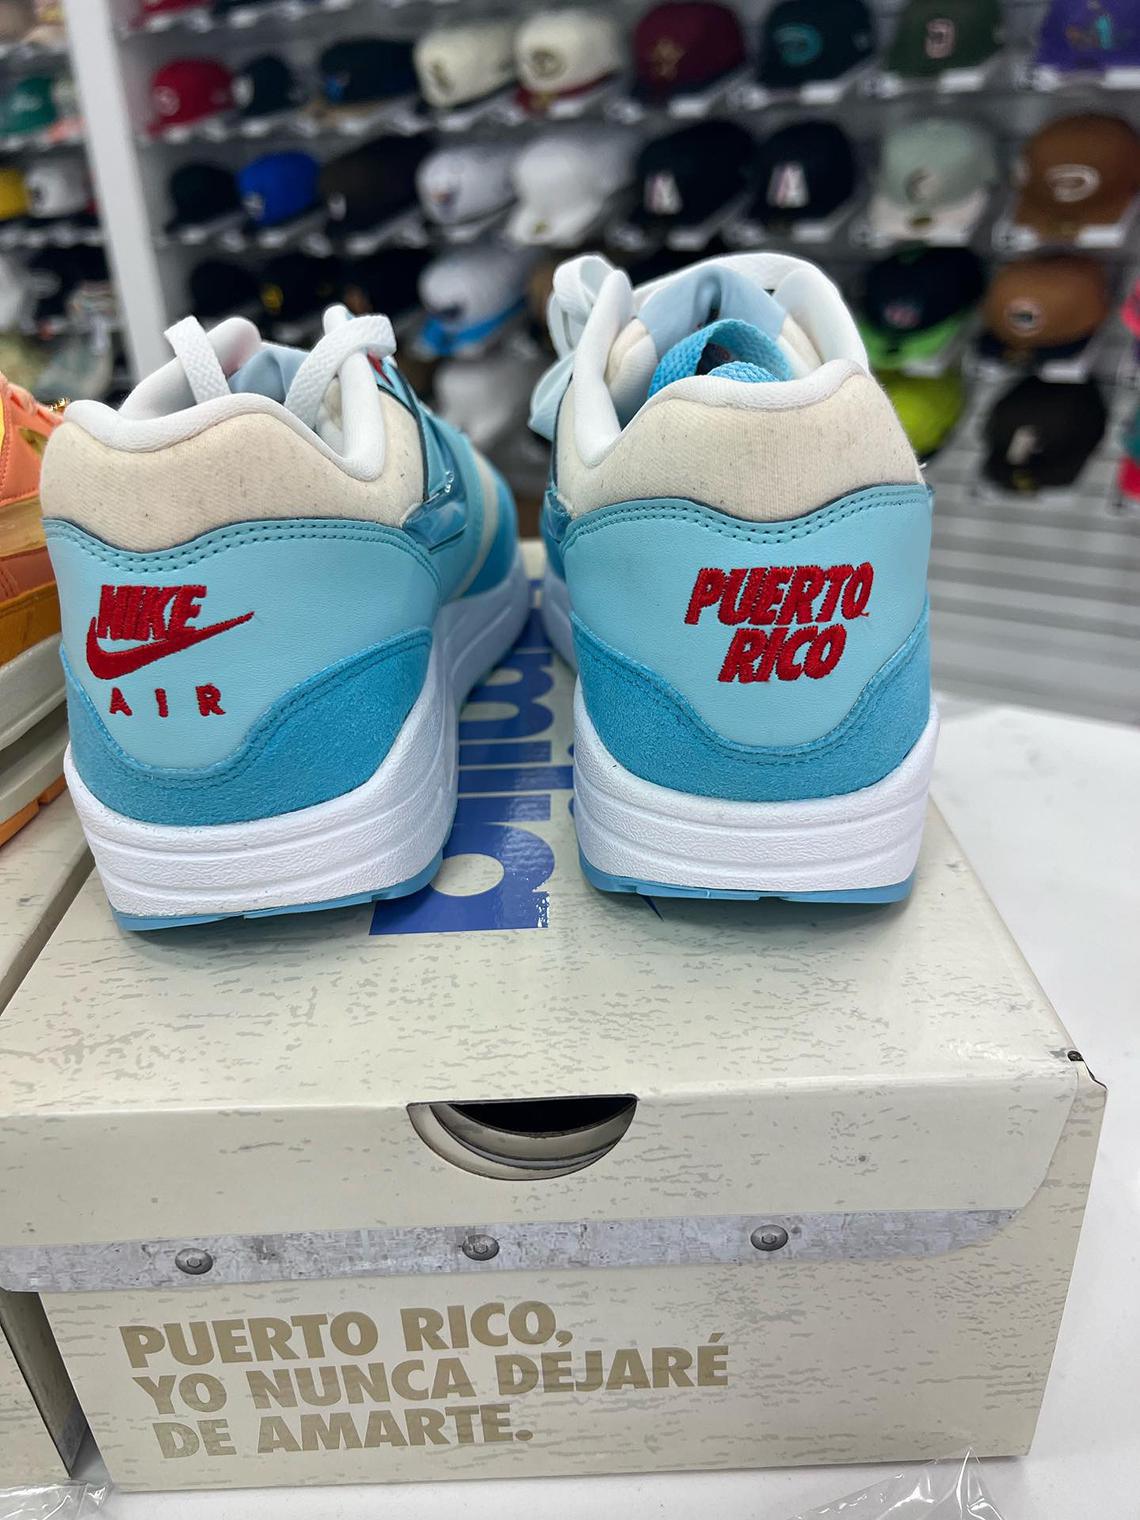 La Nike Air Max 1 "Puerto Rico" s'inspire des saveurs populaires de Piragua